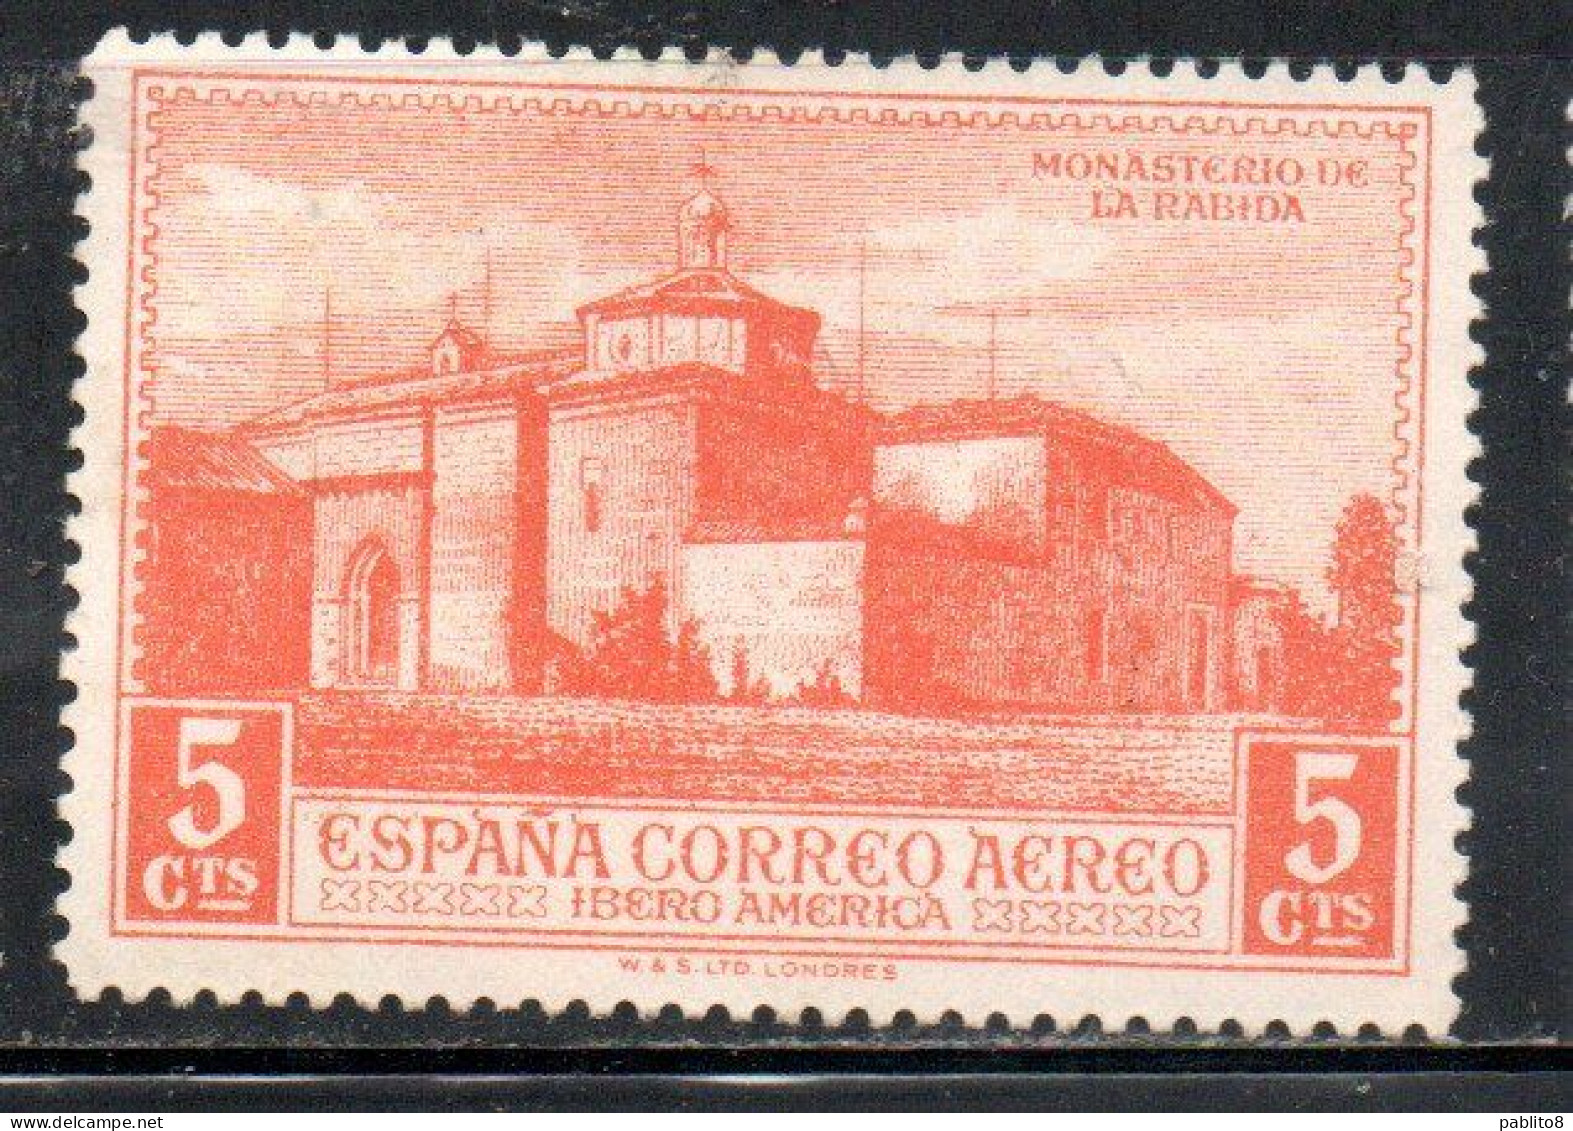 SPAIN ESPAÑA SPAGNA 1930 AIR POST MAIL AIRMAIL CHRISTOPHER COLUMBUS ISSUE LA RABYDA MONASTER  5c MLH - Nuovi